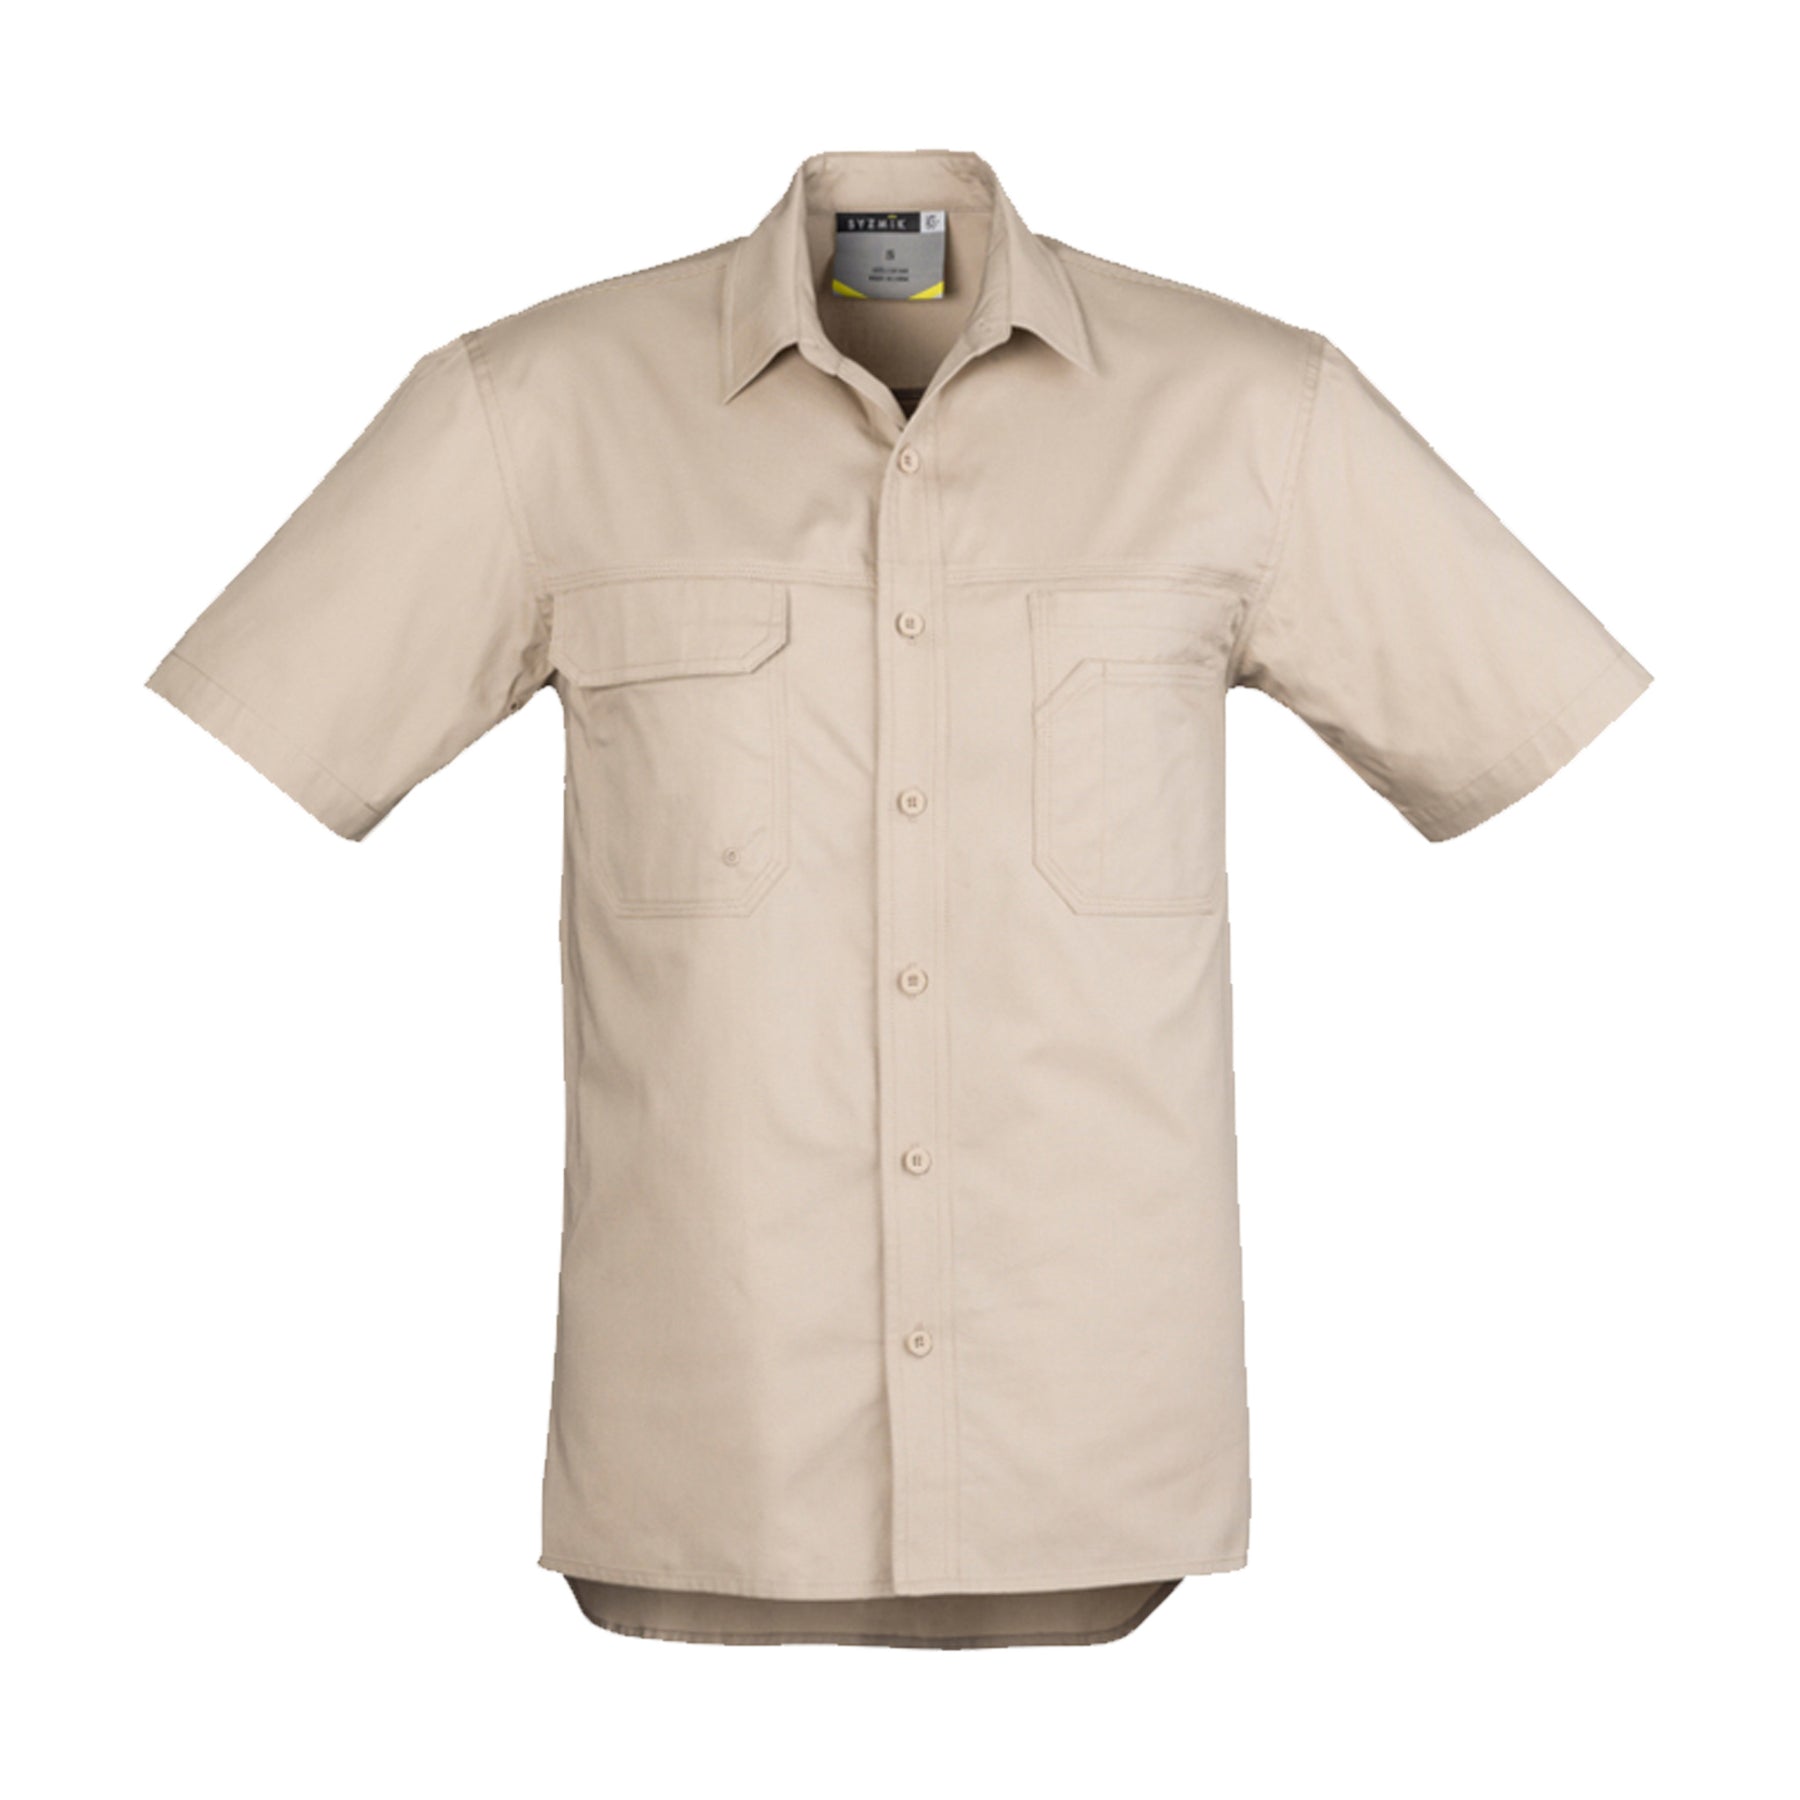 light weight short sleeve tradie shirt in sand